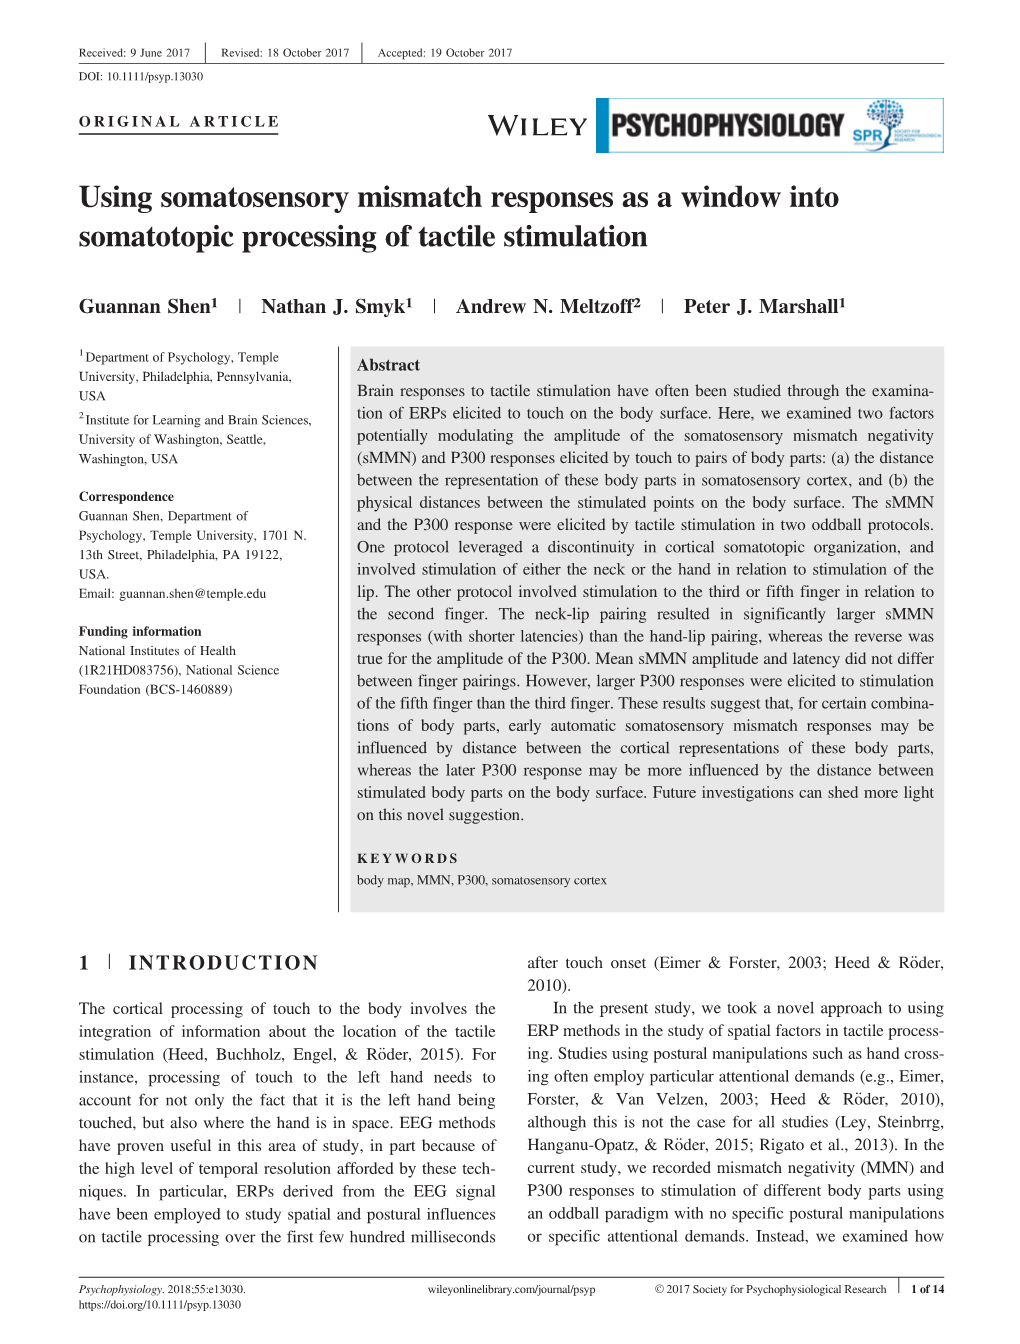 Using Somatosensory Mismatch Responses As a Window Into Somatotopic Processing of Tactile Stimulation